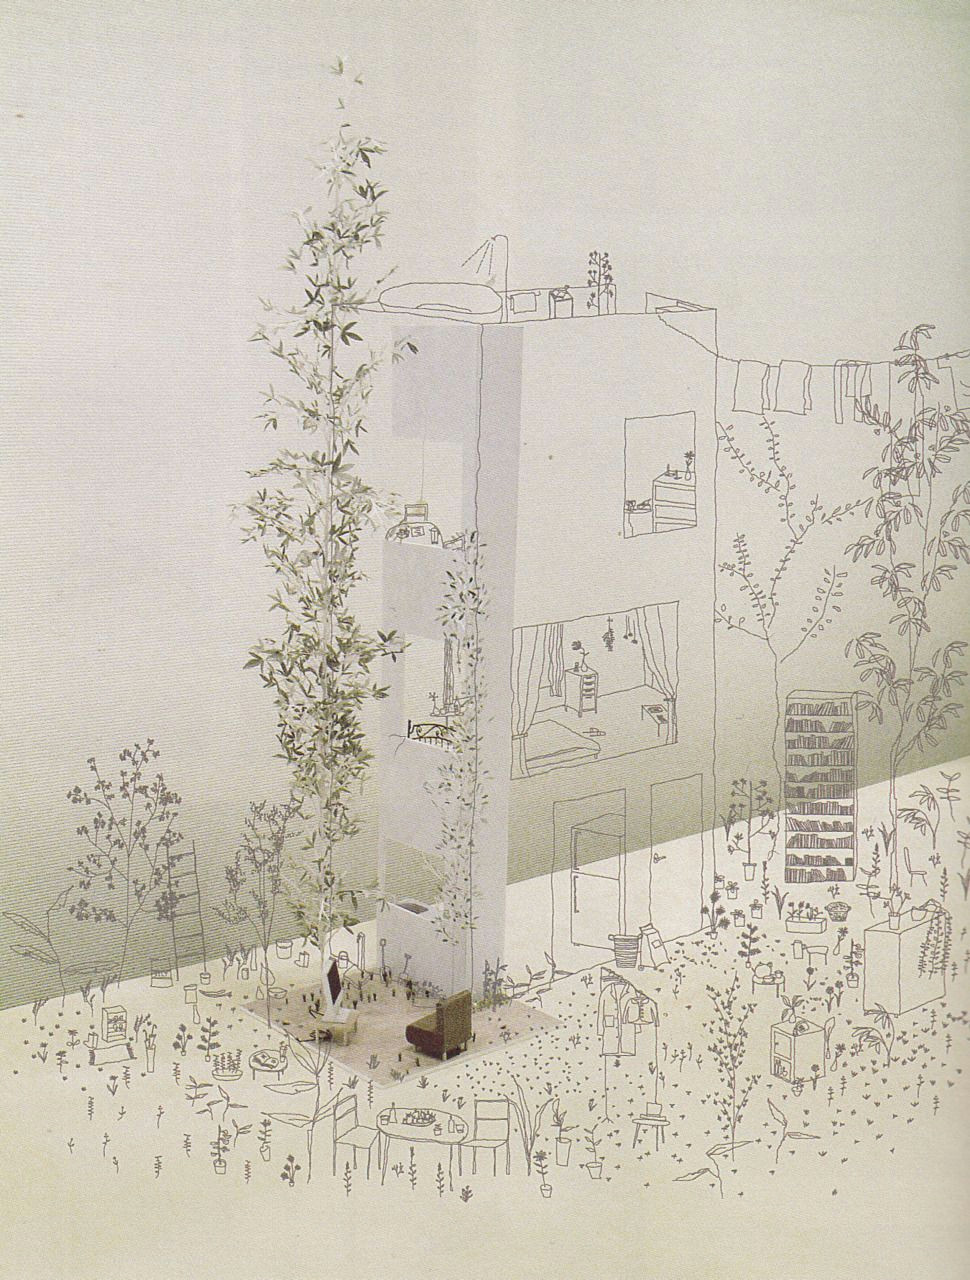 betonbabe a a a a junya ishigami row house in tokyo 2005 betonbabe tumblr com